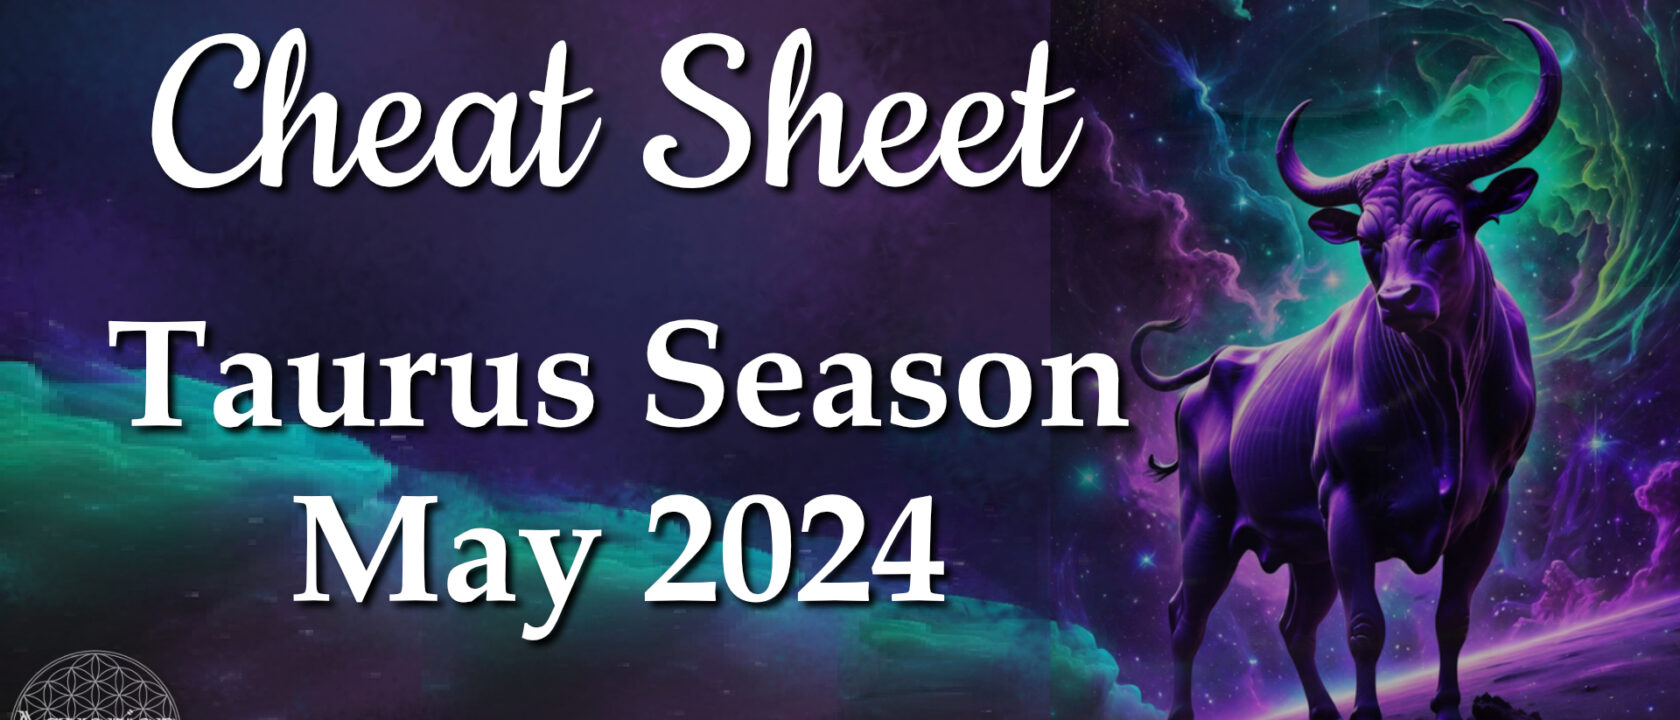 Taurus Season 2024 Cheat Sheet